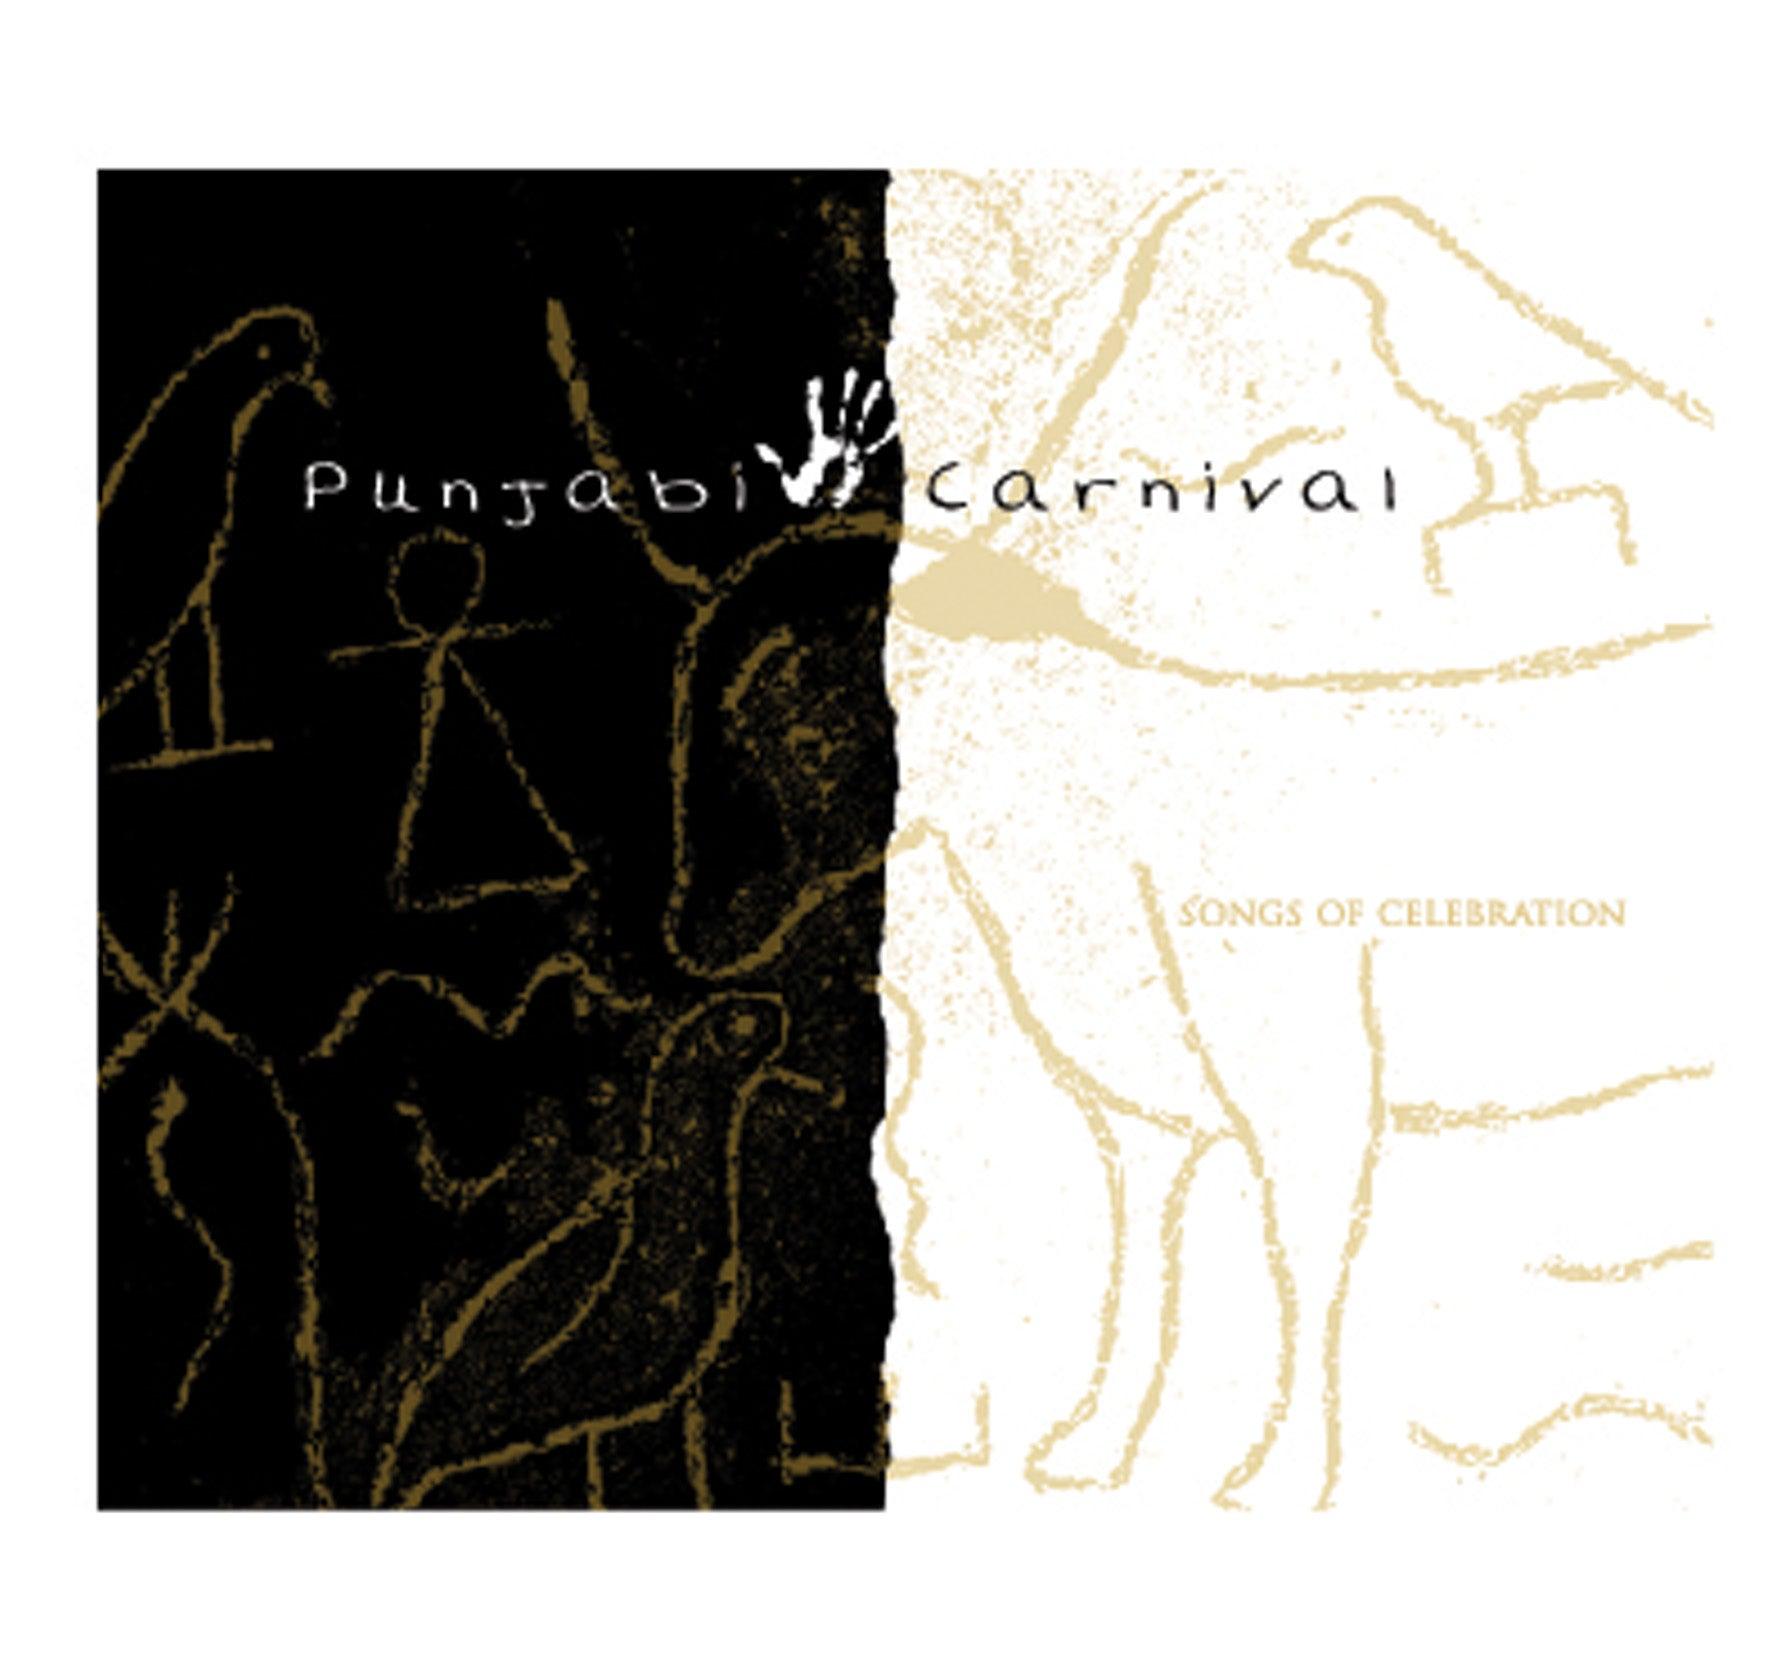 Punjabi Carnival Music CD - DeKulture DKM-047-A